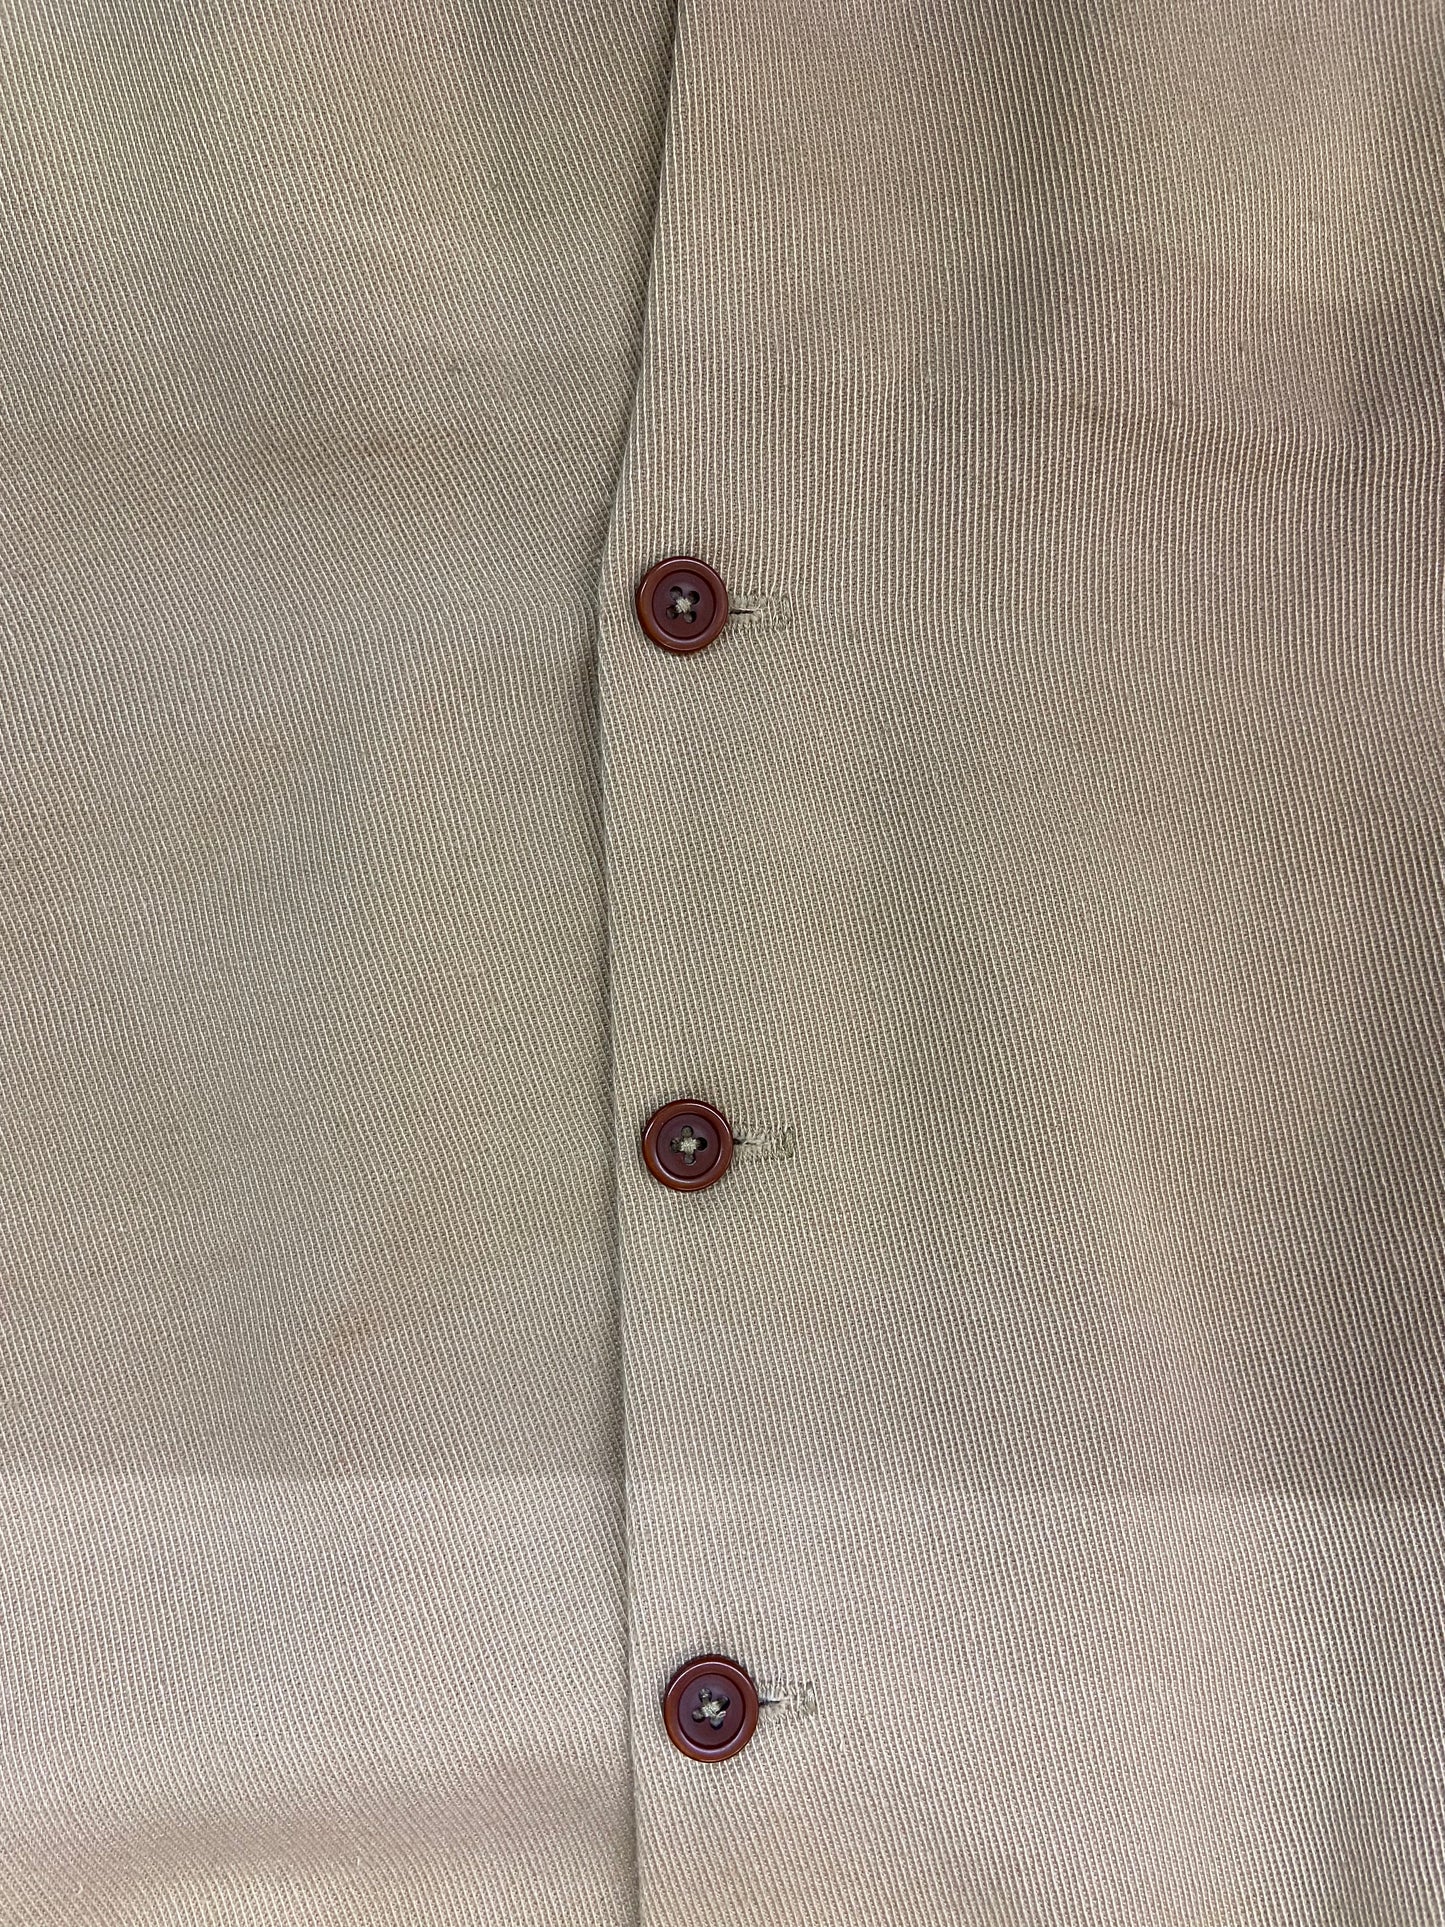 VTG Khaki Button Front Skirt Sz 30x26